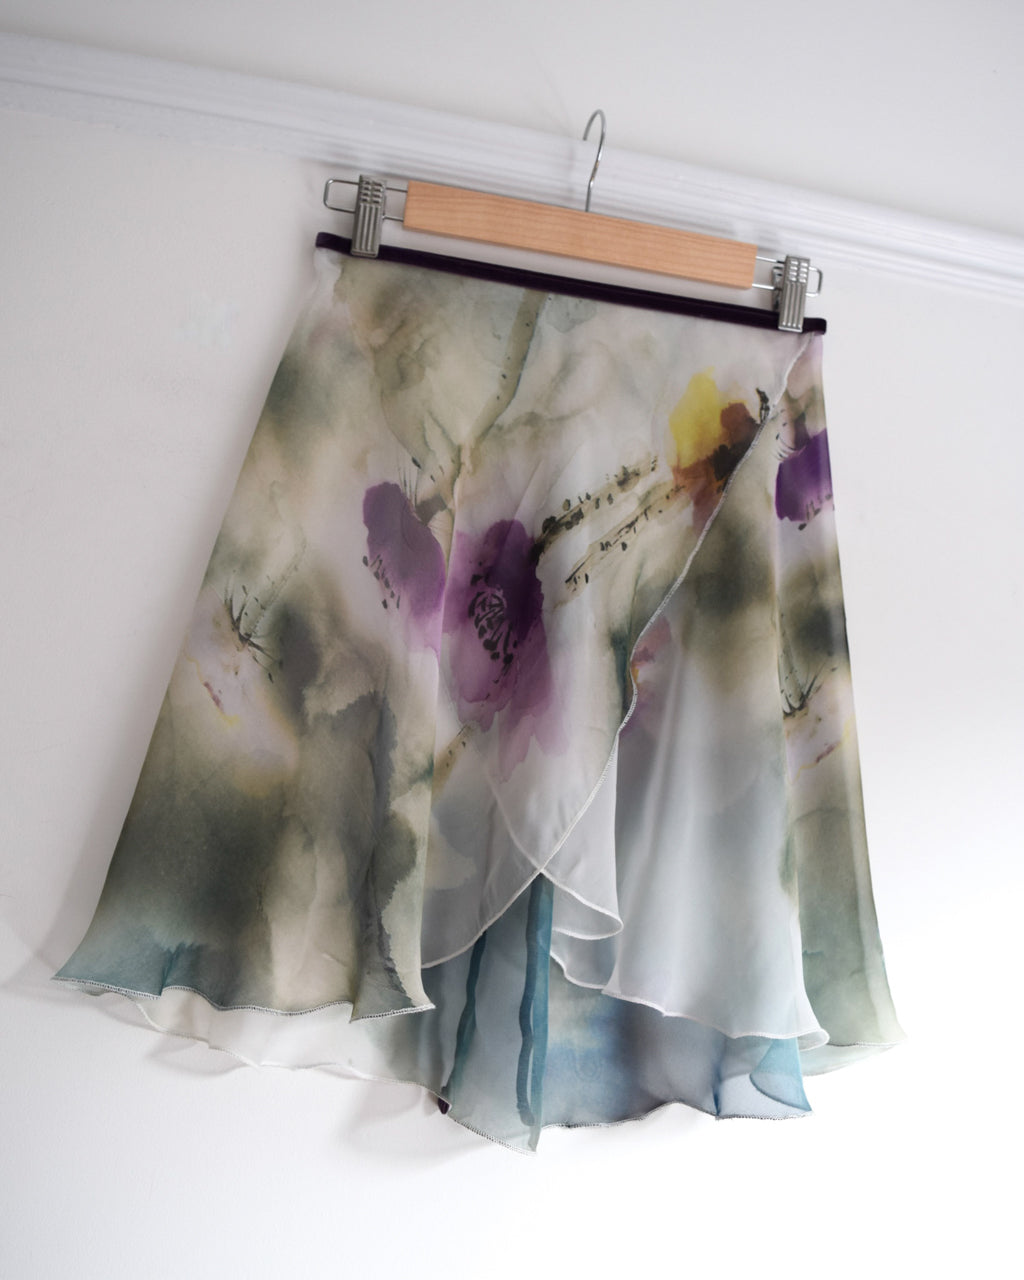 B.S.B.L Wrap Skirt 'Poppy Paradox Purple' バレエ巻きスカート 40cm, 48cm, 53cm